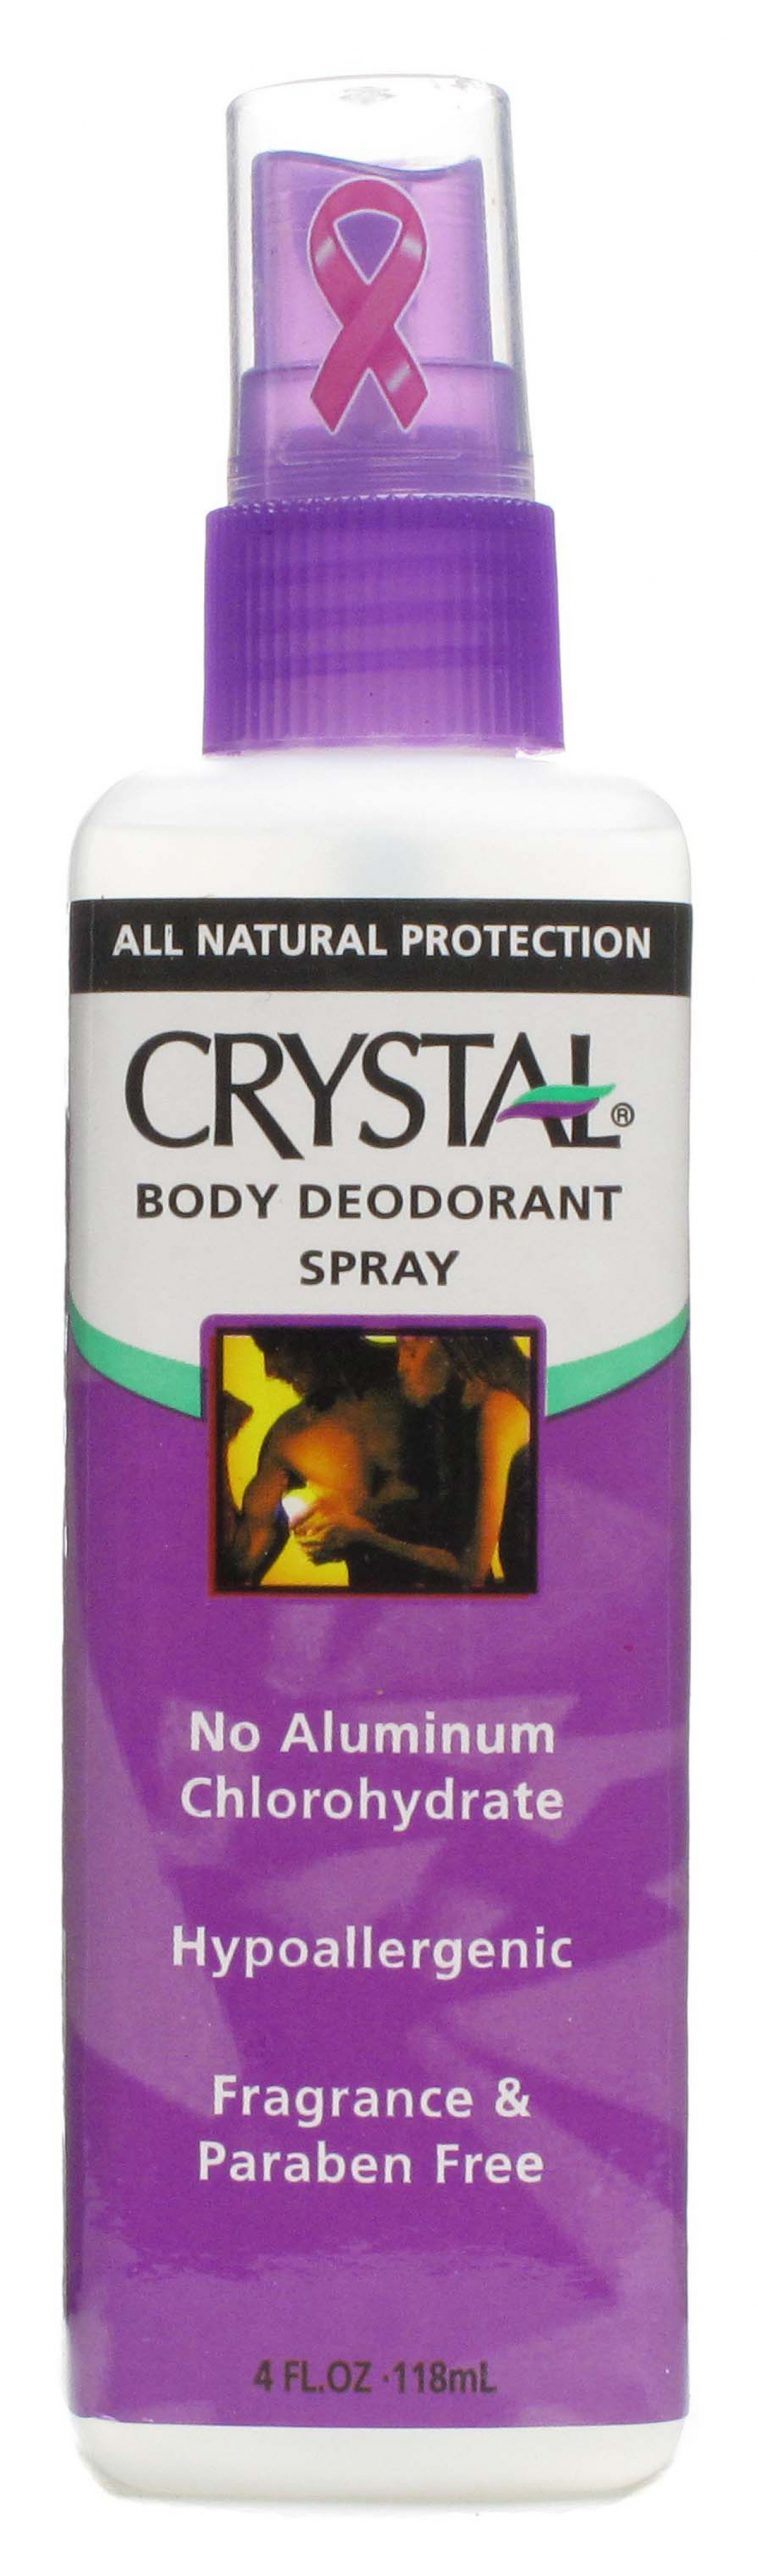 Crystal Deodorant Body Spray